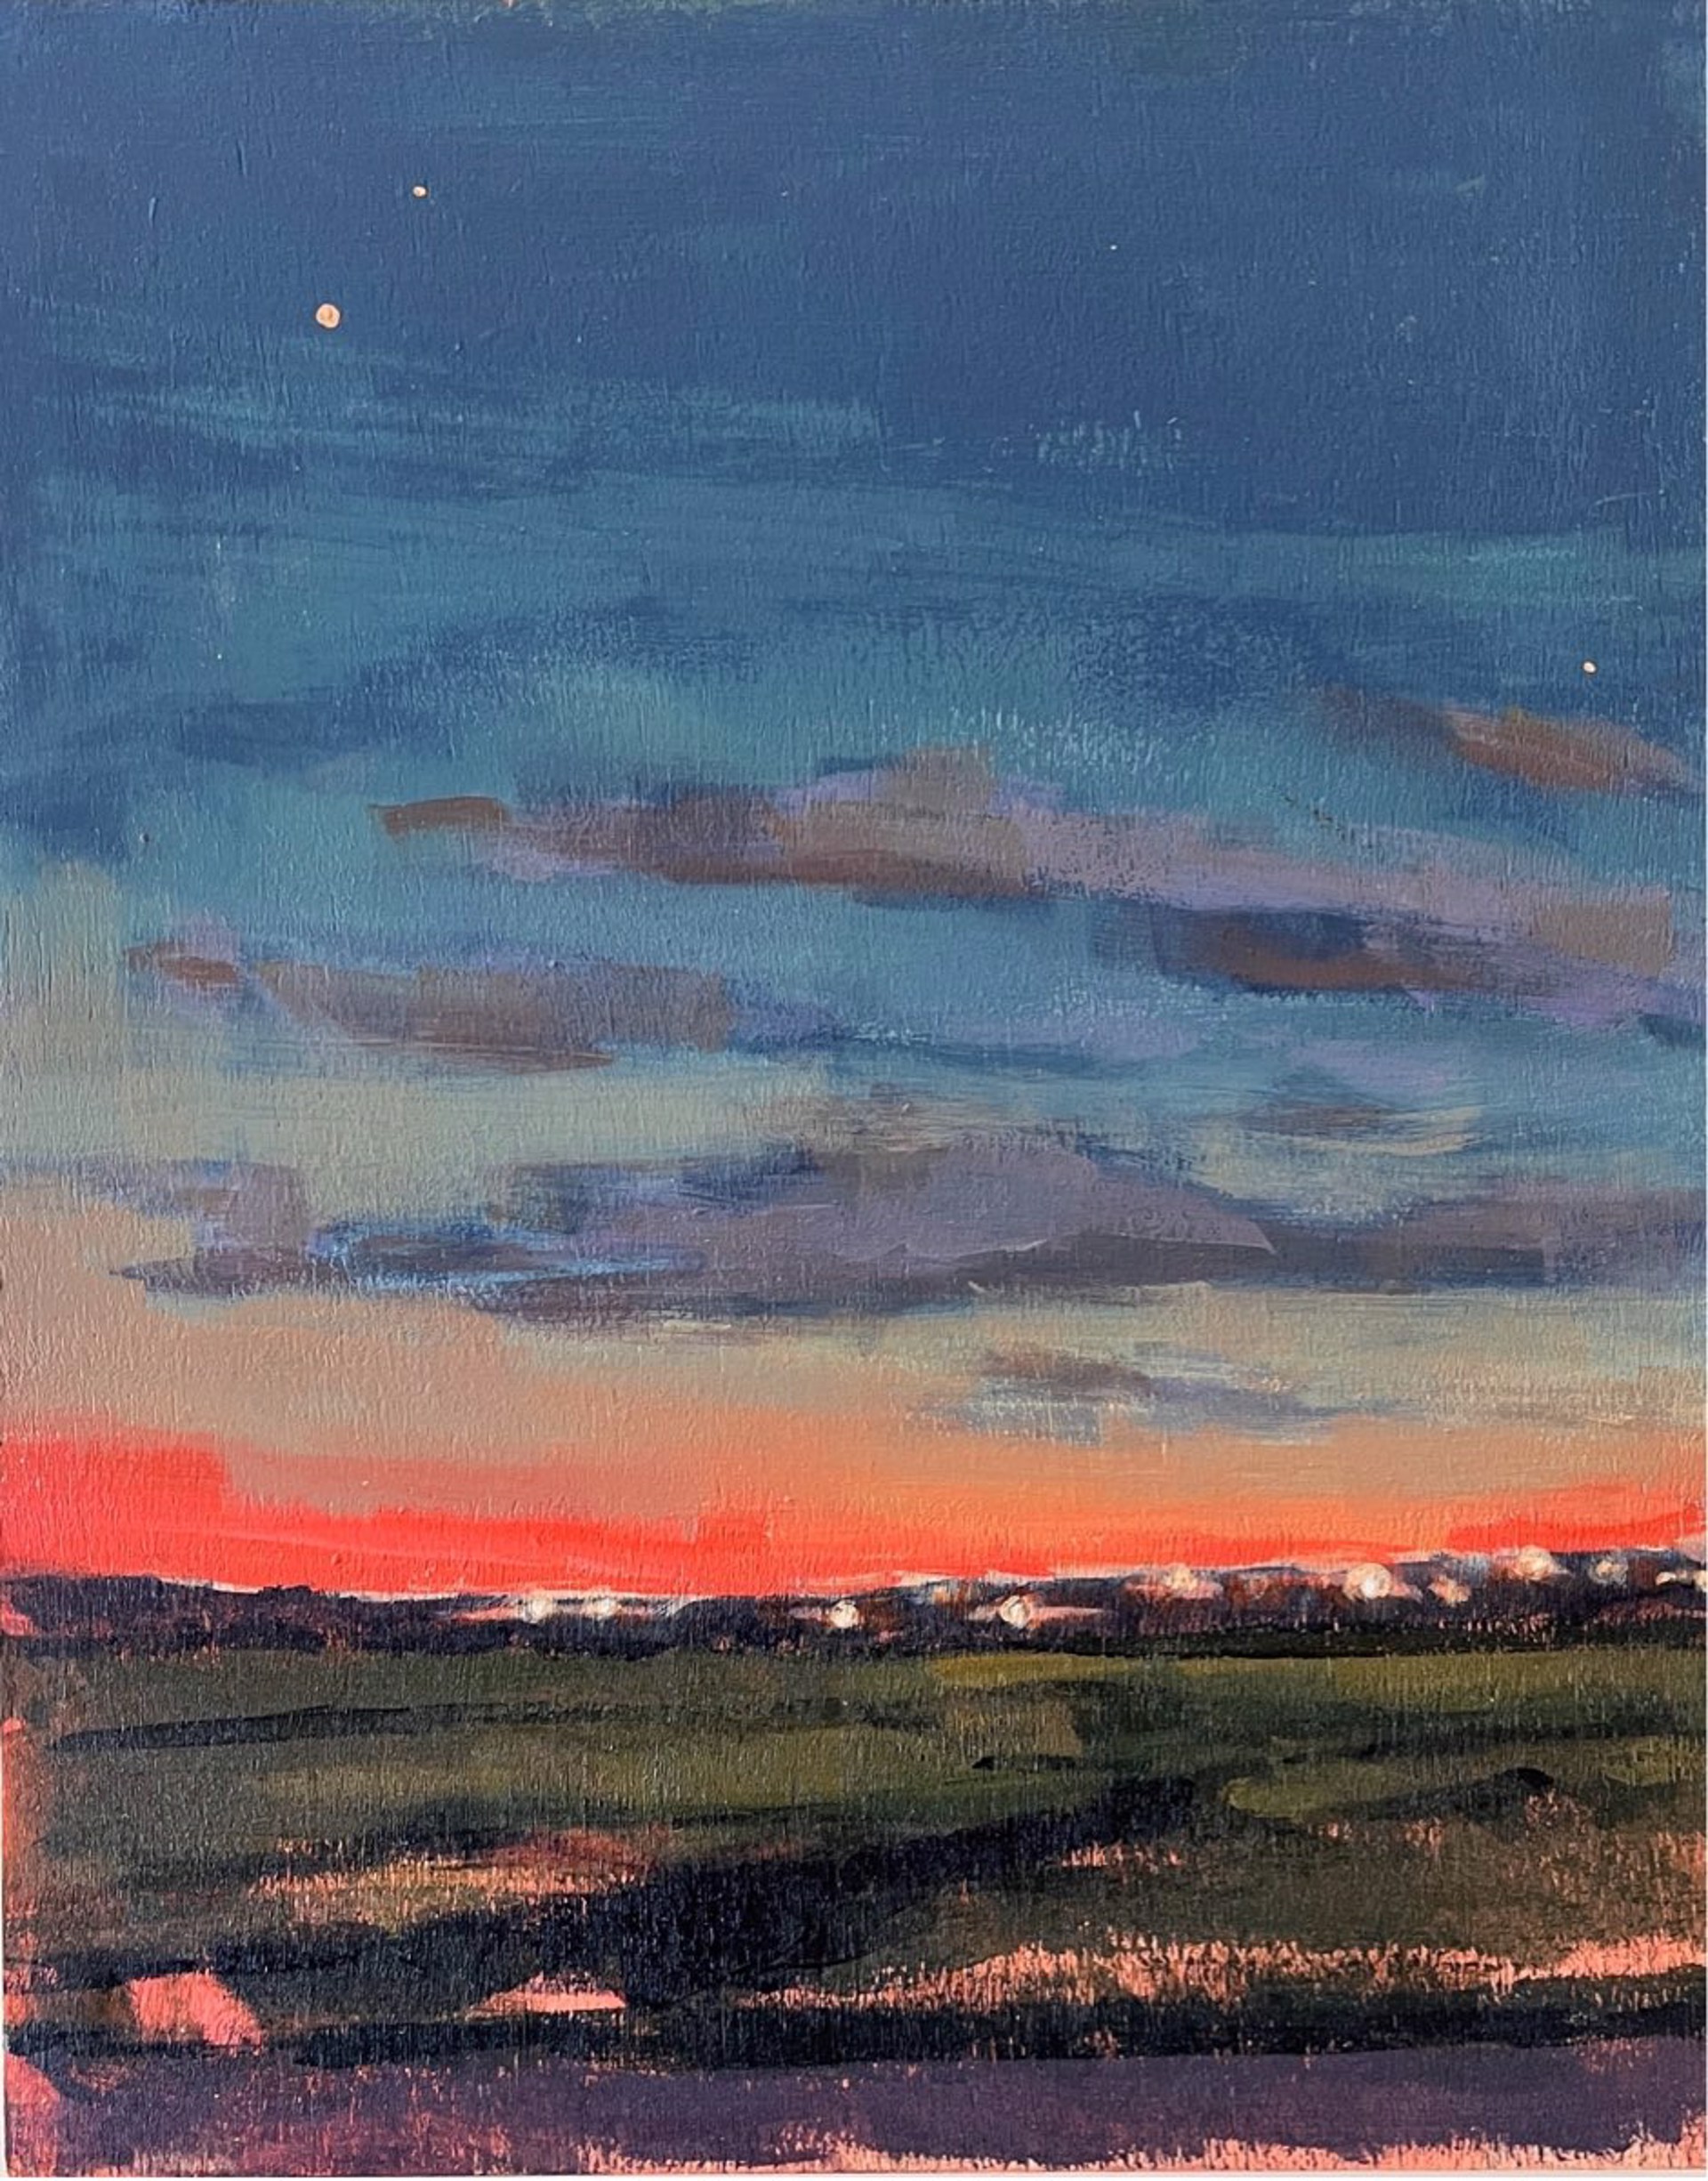 Winter Sunset no. 4 by Maggie Stickney